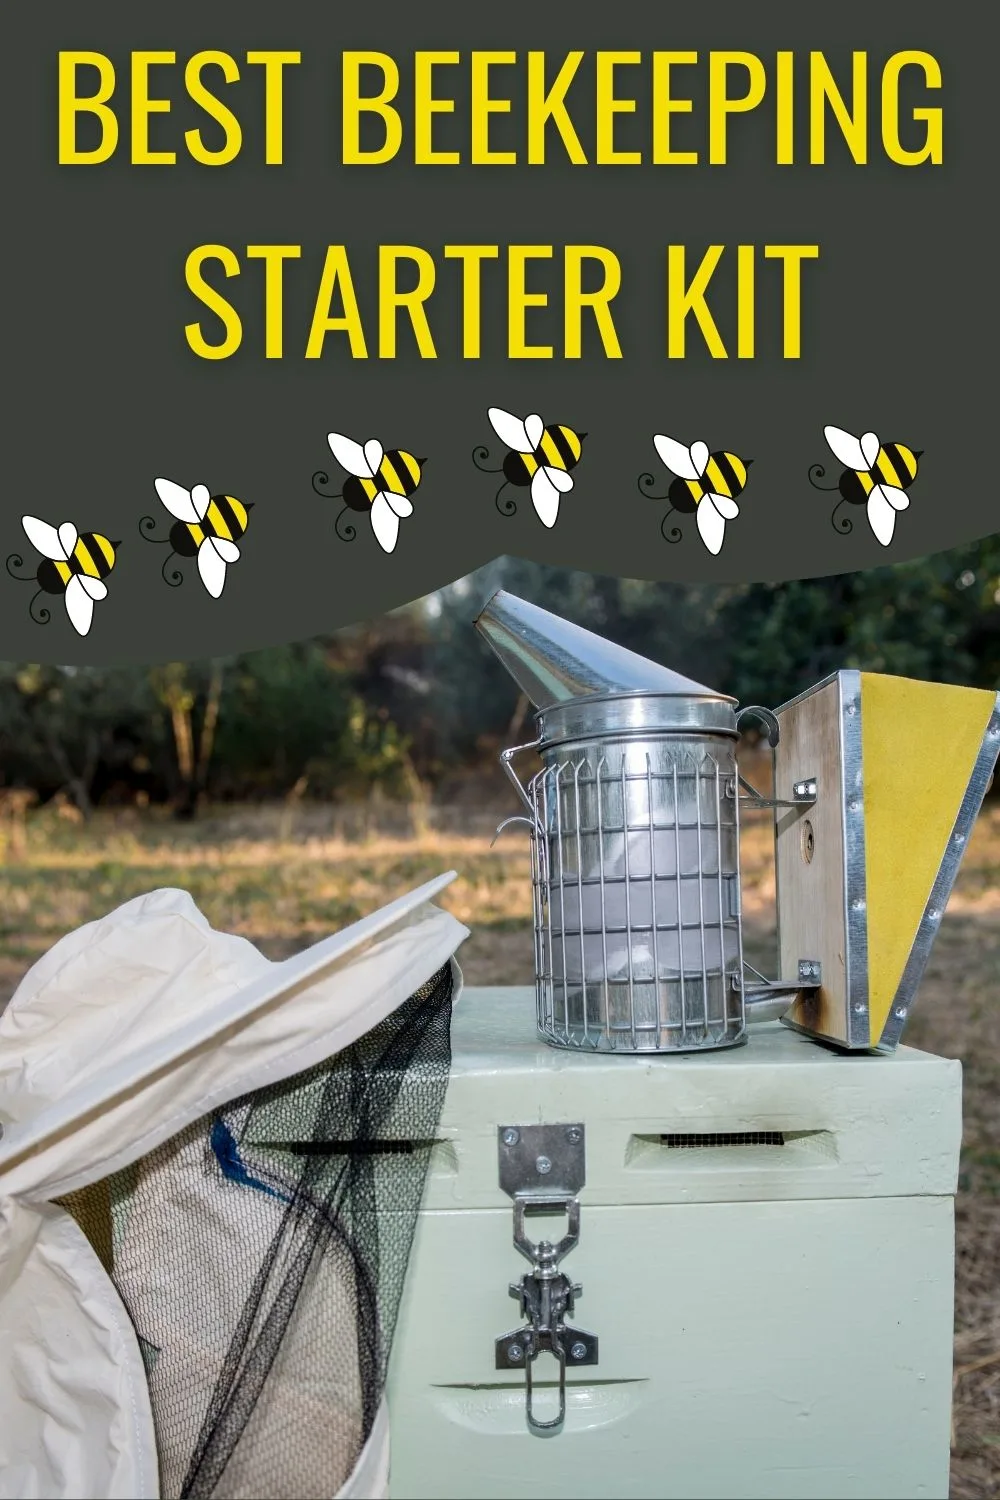 Best beekeeping starter kit